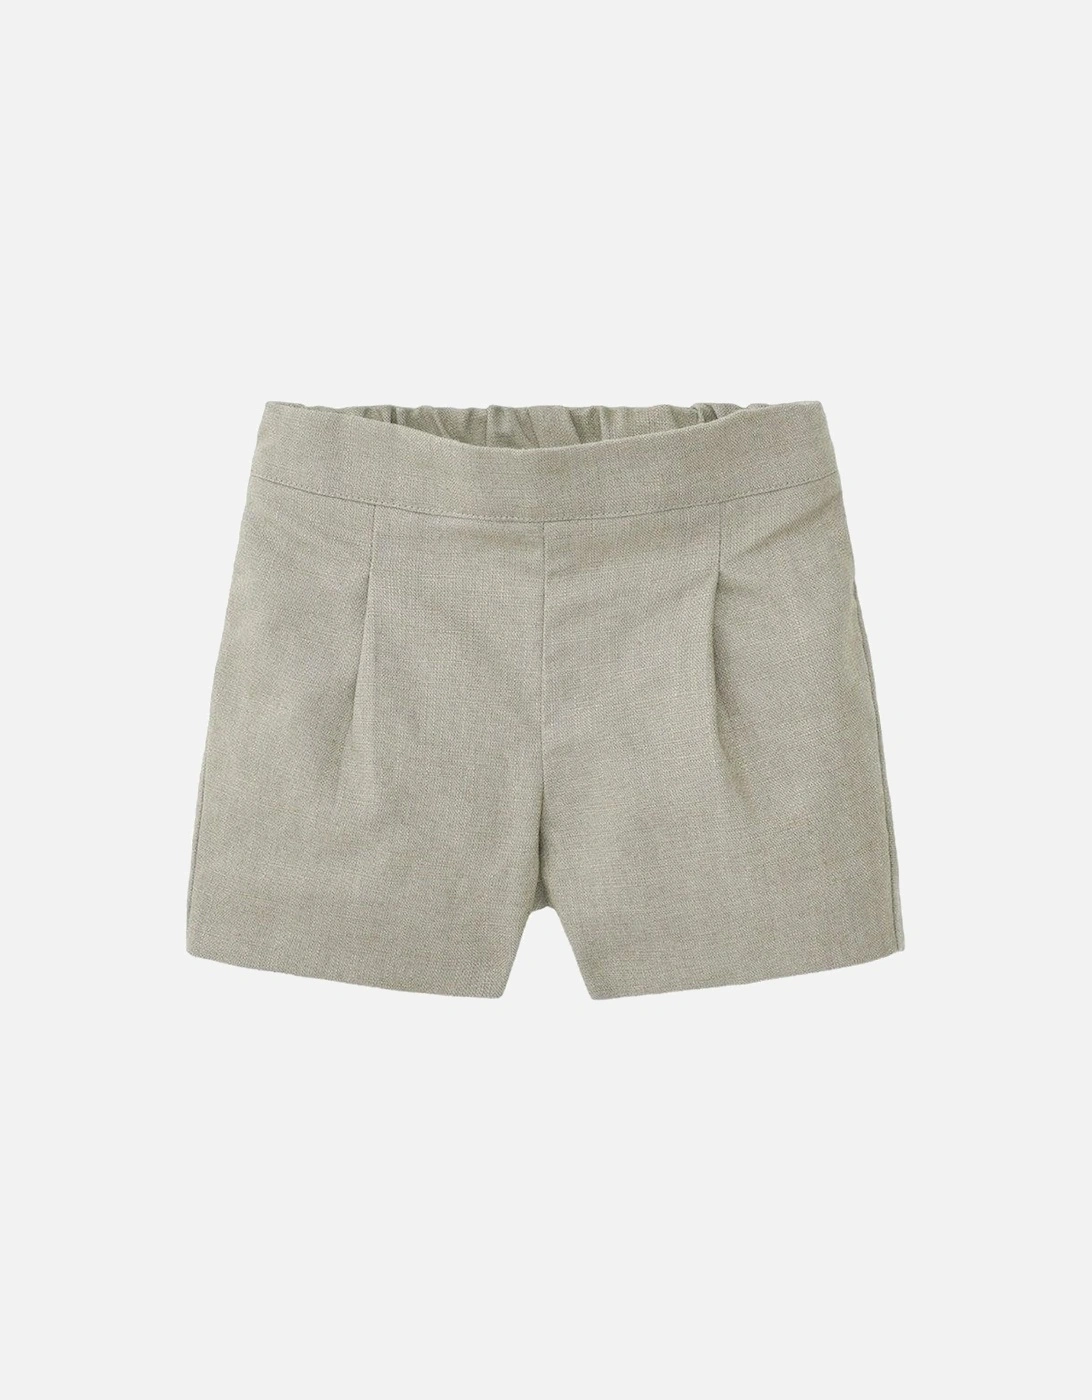 Baby Boys Beige Shorts & Shirt Set